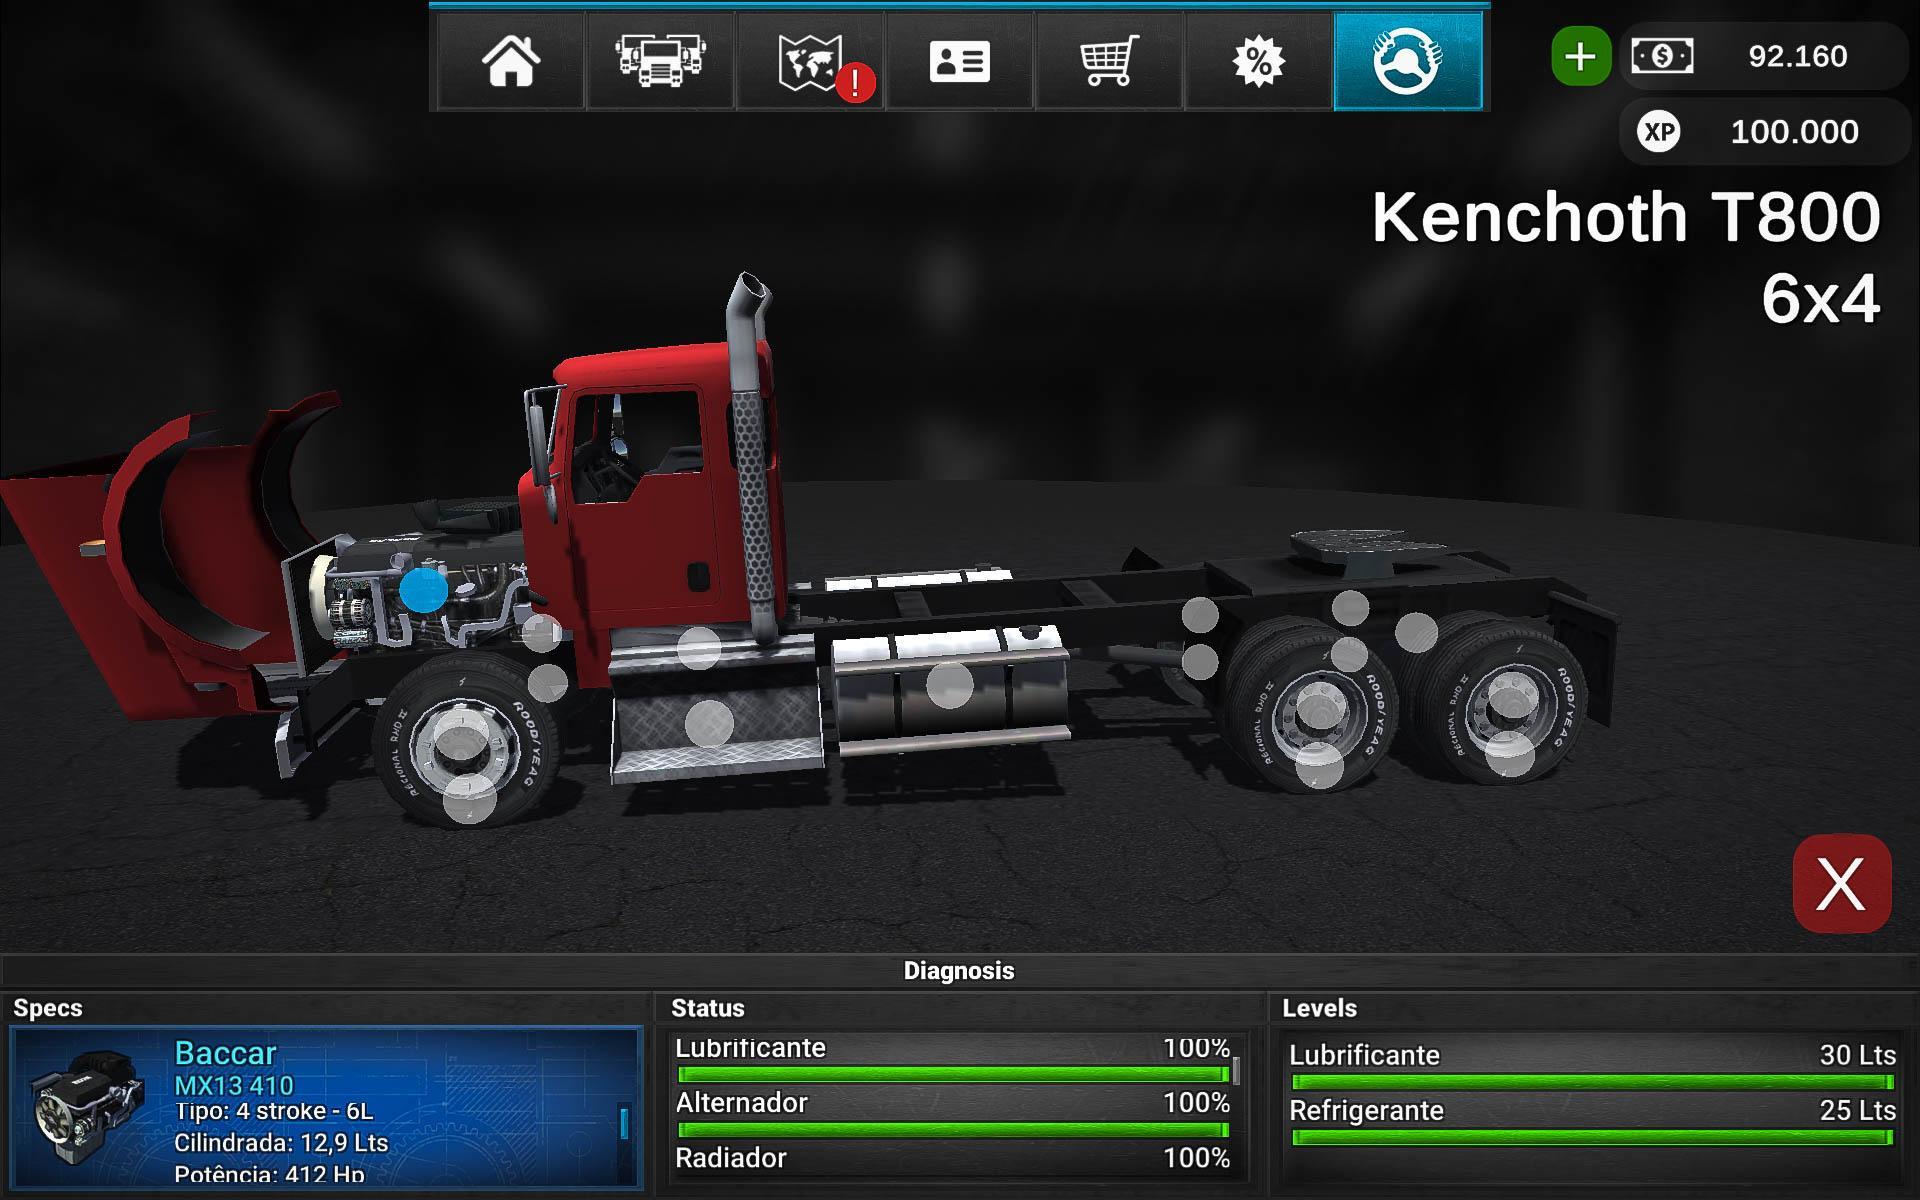 Grand Truck Simulator - Download do APK para Android